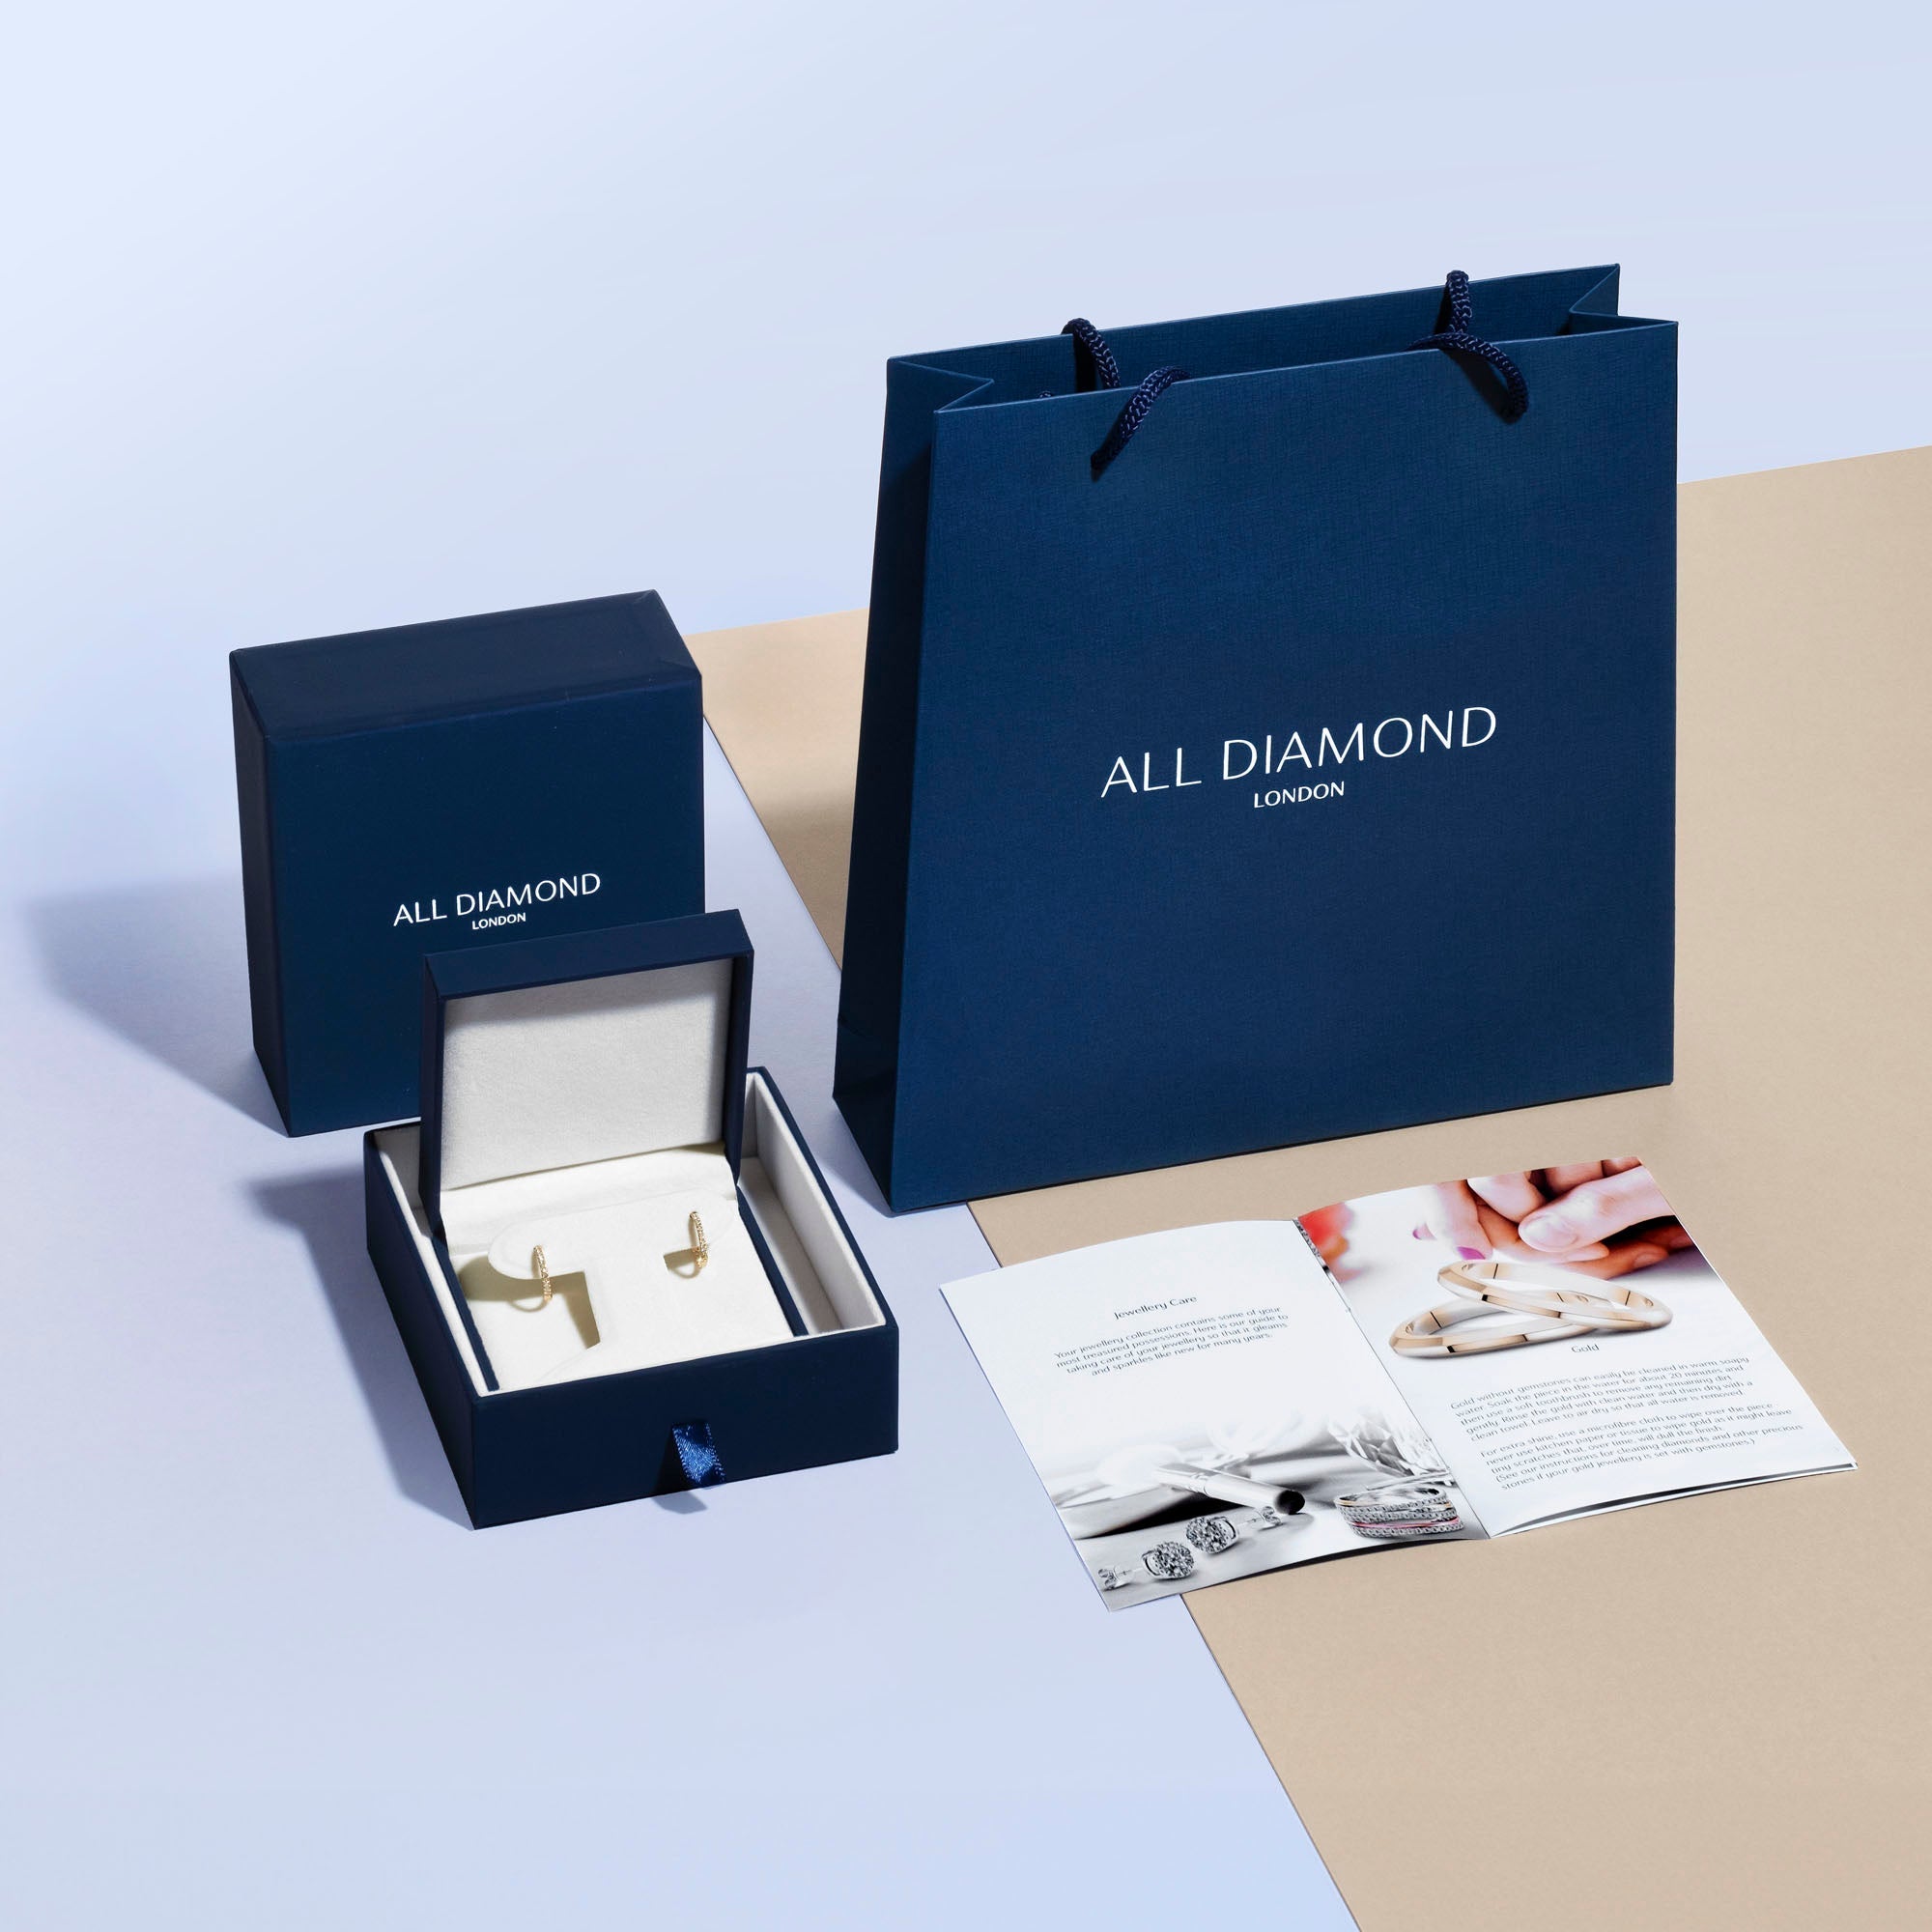 18k White Gold Diamond Cluster Earrings 0.50ct in G/SI Quality - All Diamond